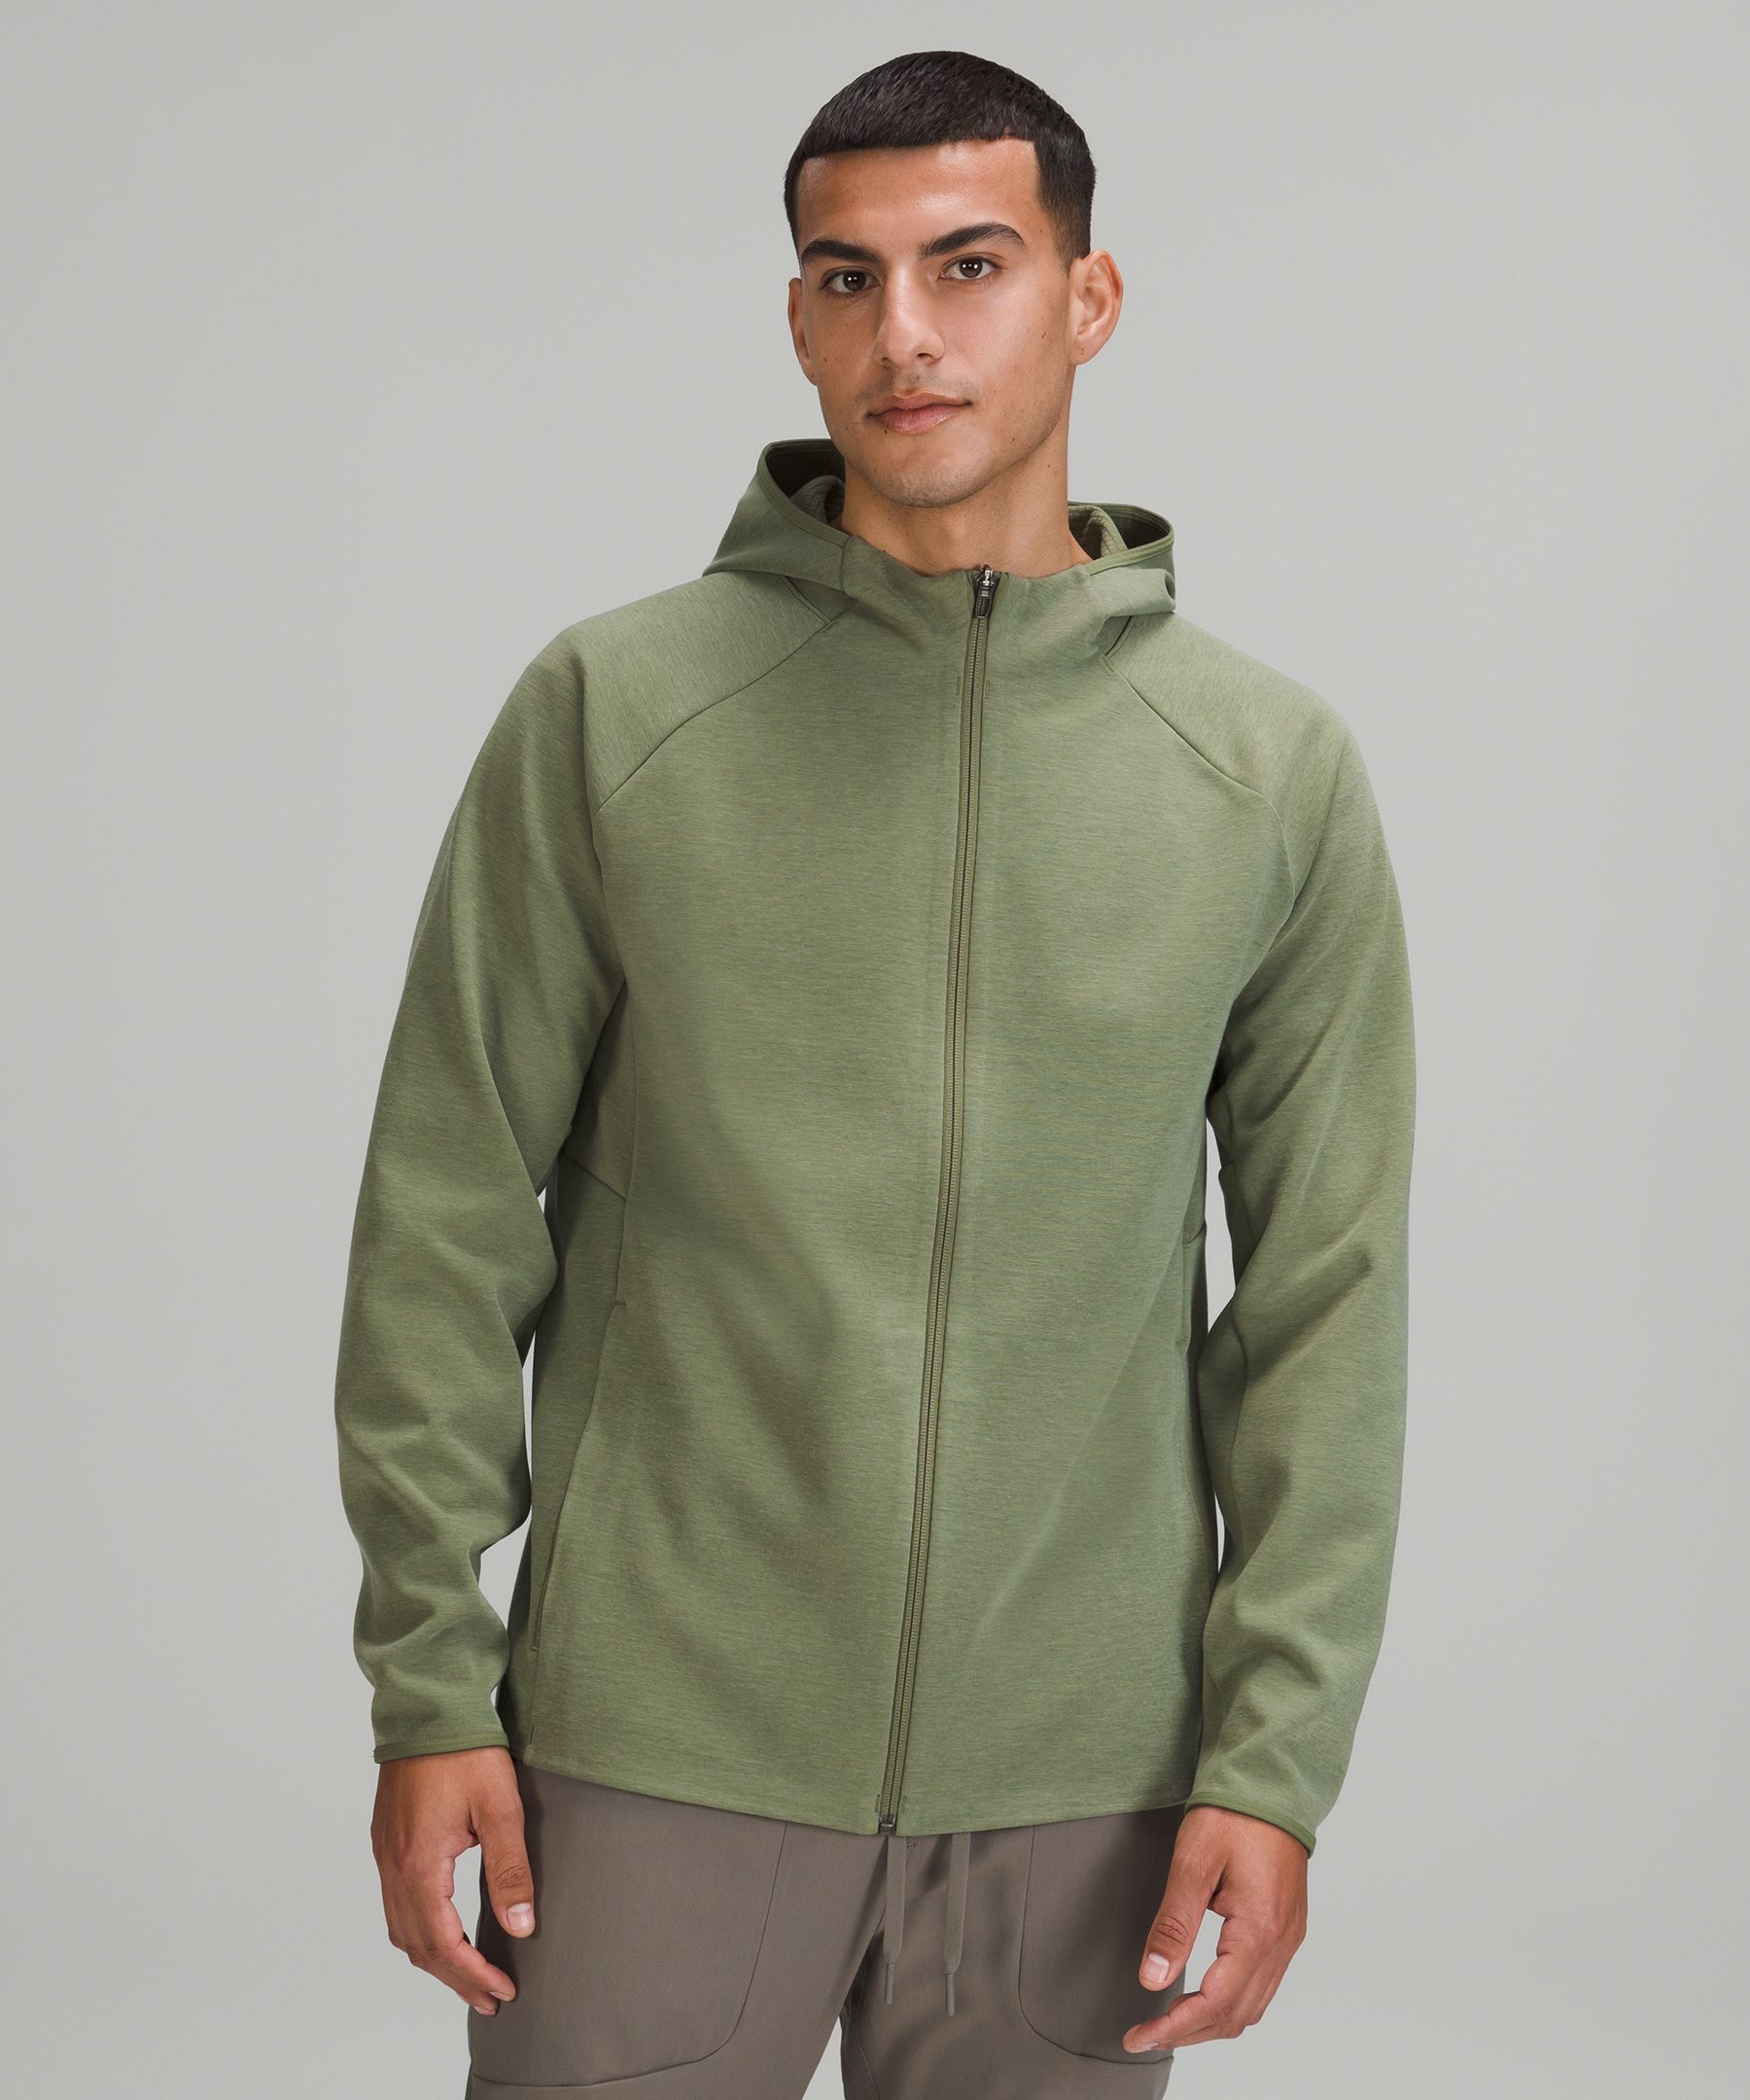 Men's Green Hoodies & Sweatshirts | lululemon